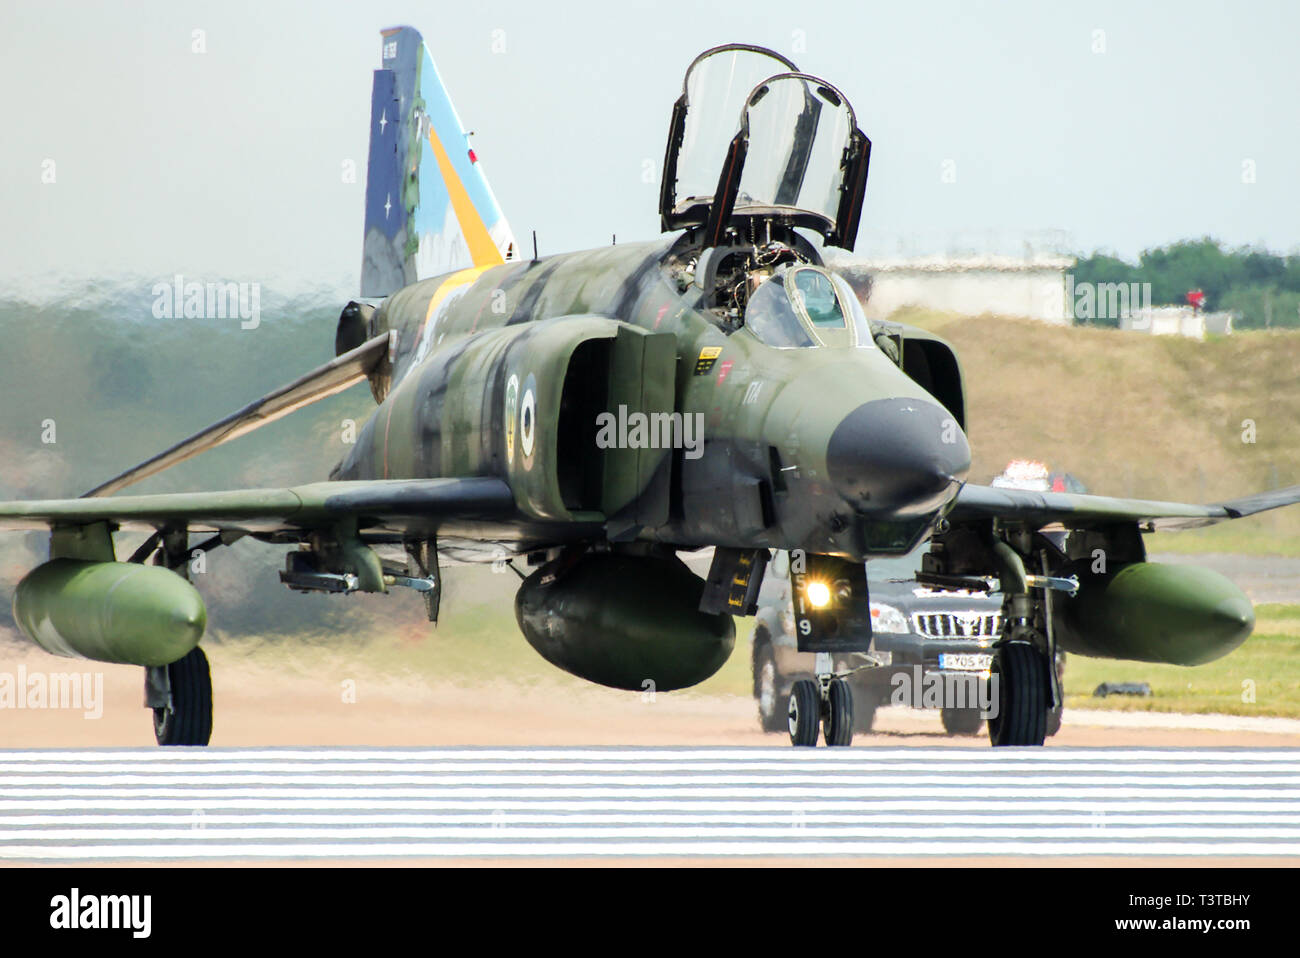 hellenic-air-force-mcdonnell-douglas-rf-4-phantom-ii-photo-reconnaissance-jet-plane-with-special-paint-scheme-348-mta-squadron-T3TBHY.jpg